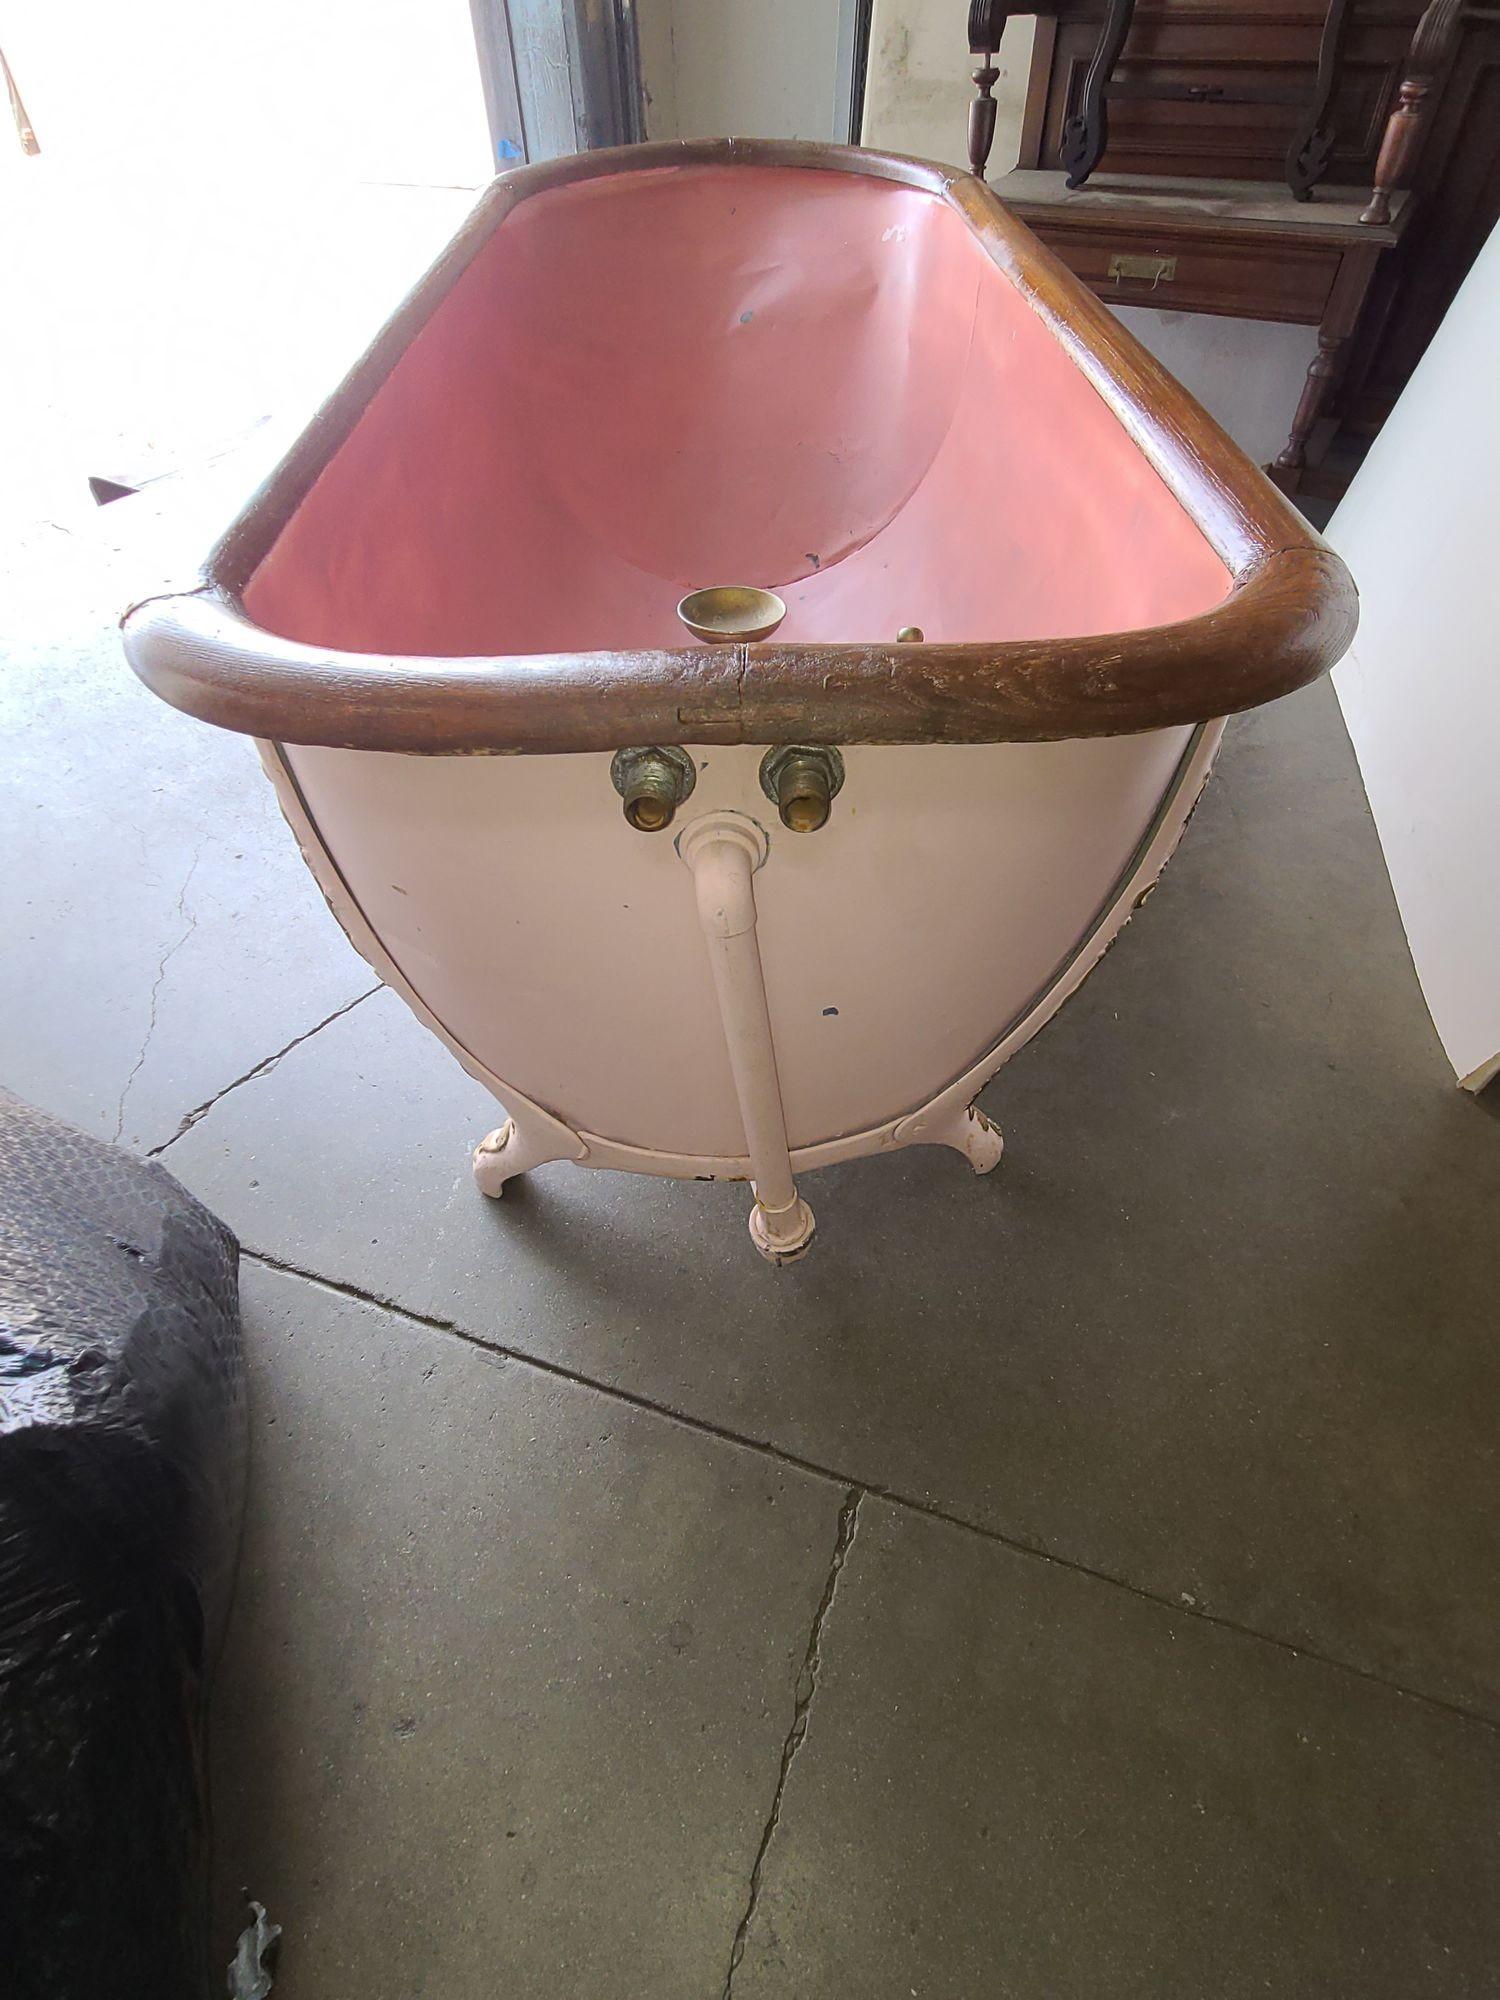 galvanized tub for bathing